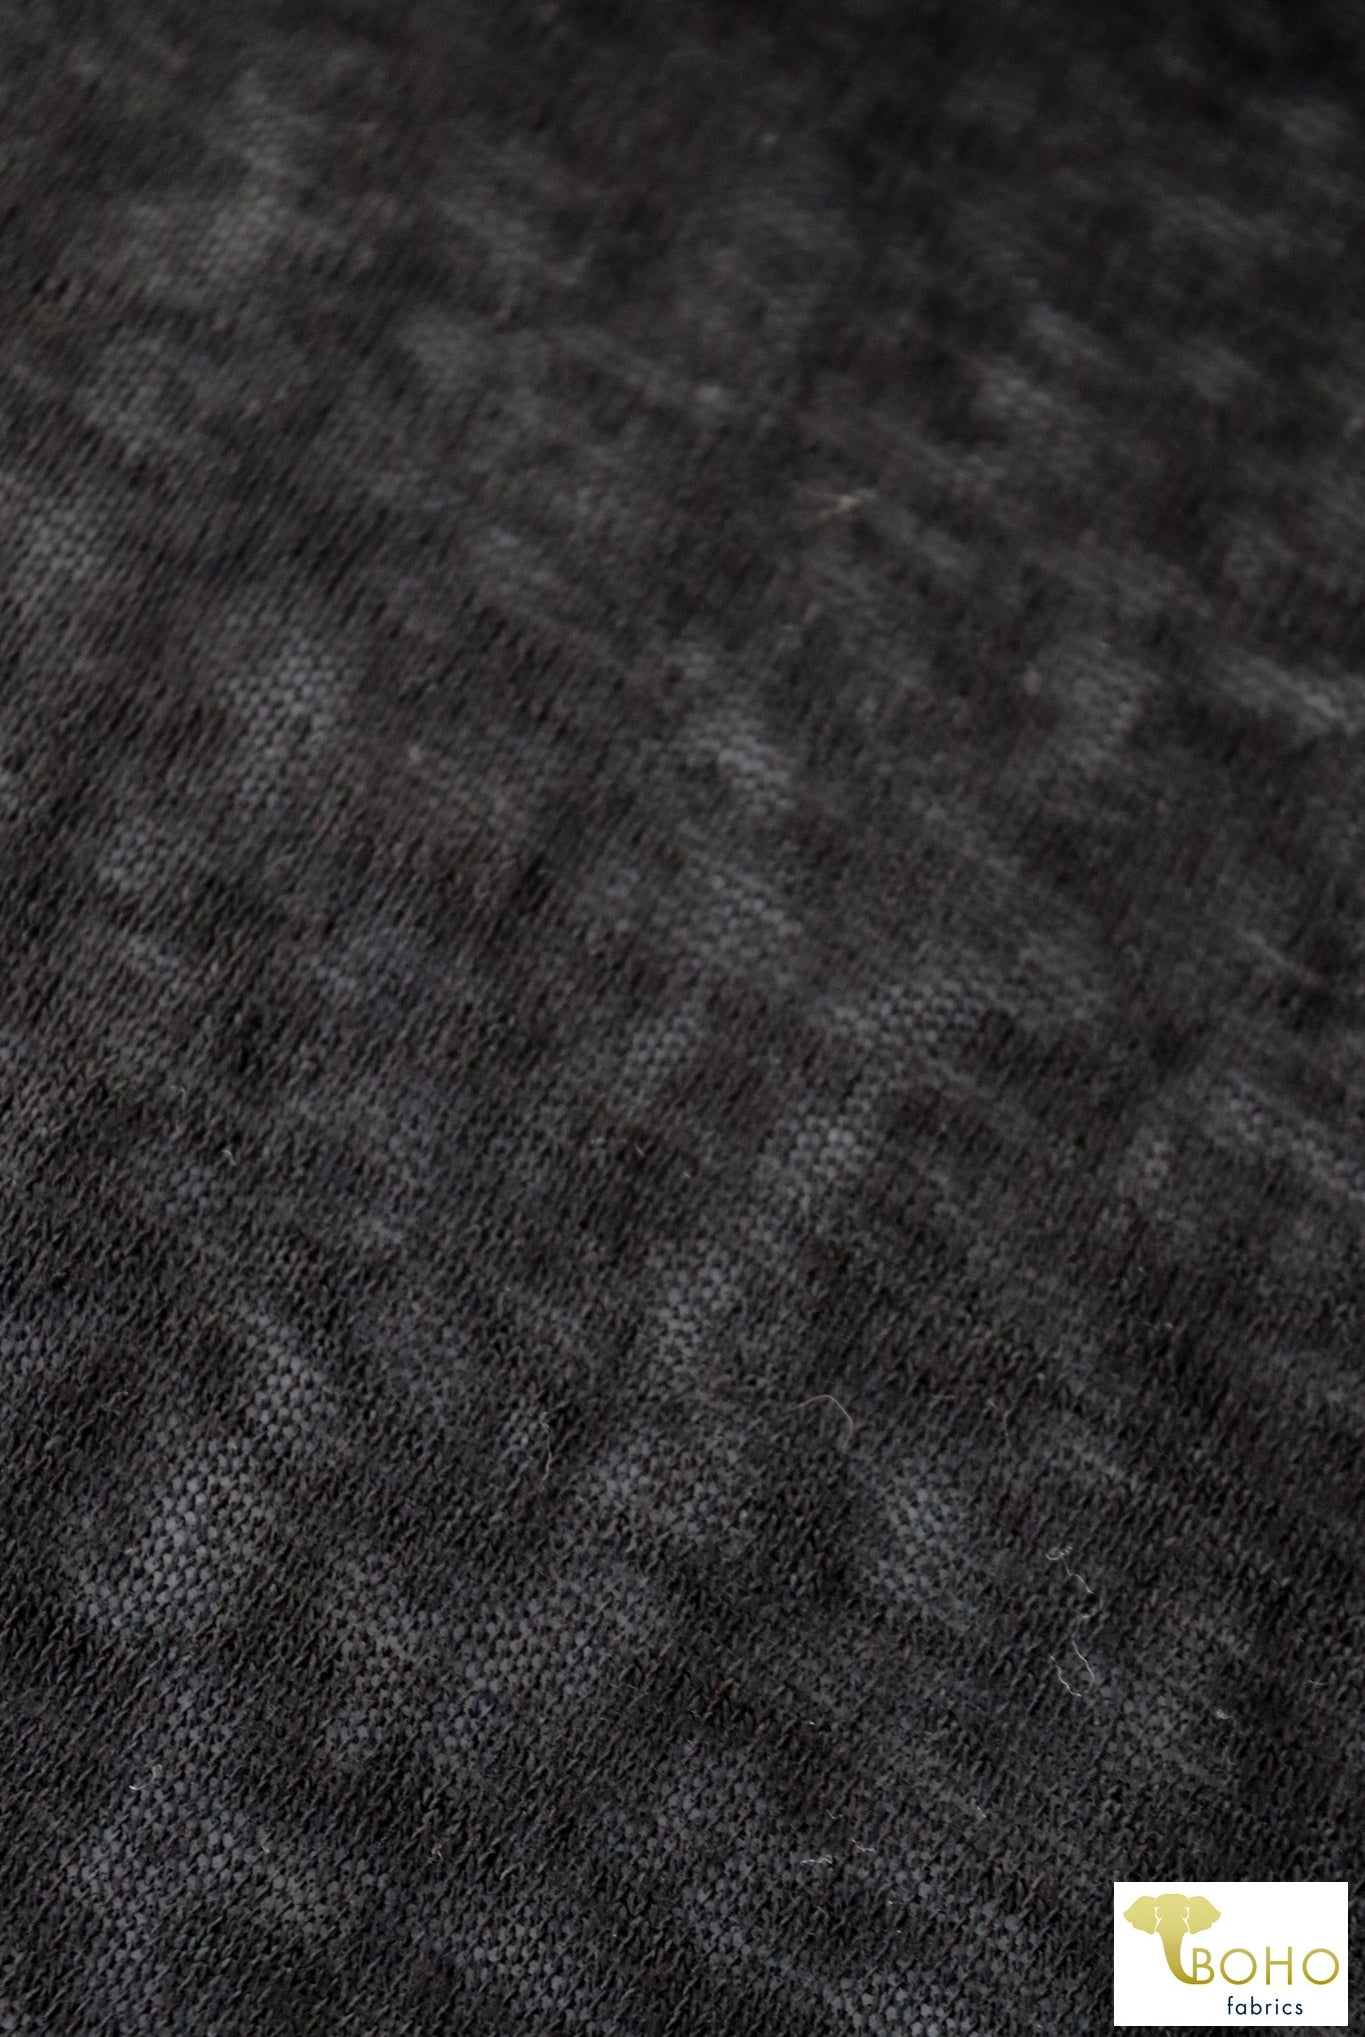 Meteorite Black, Lightweight Sweater Knit - Boho Fabrics